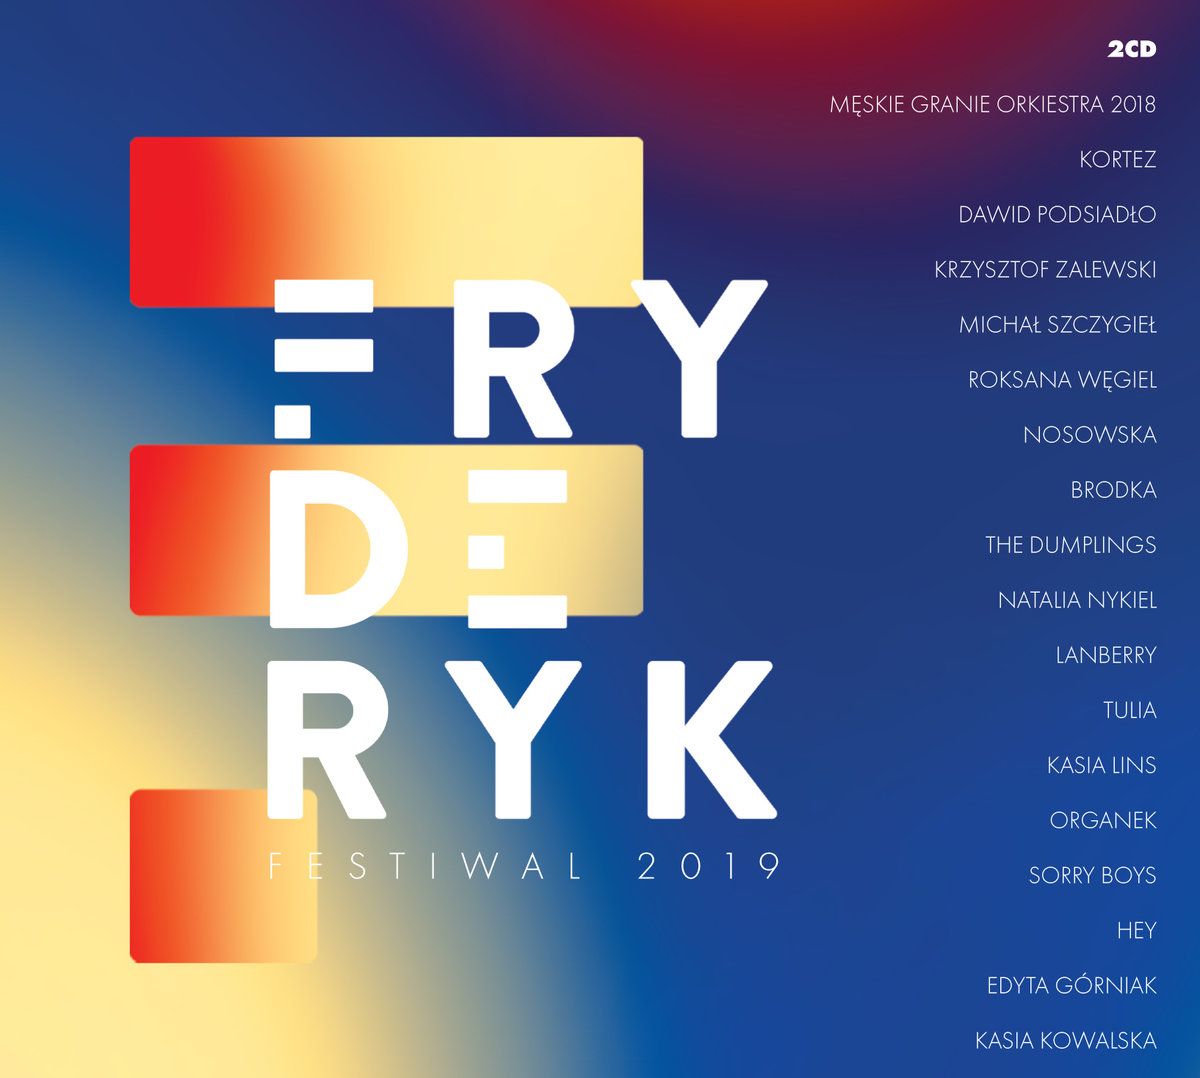 Fryderyk Festiwal 2019